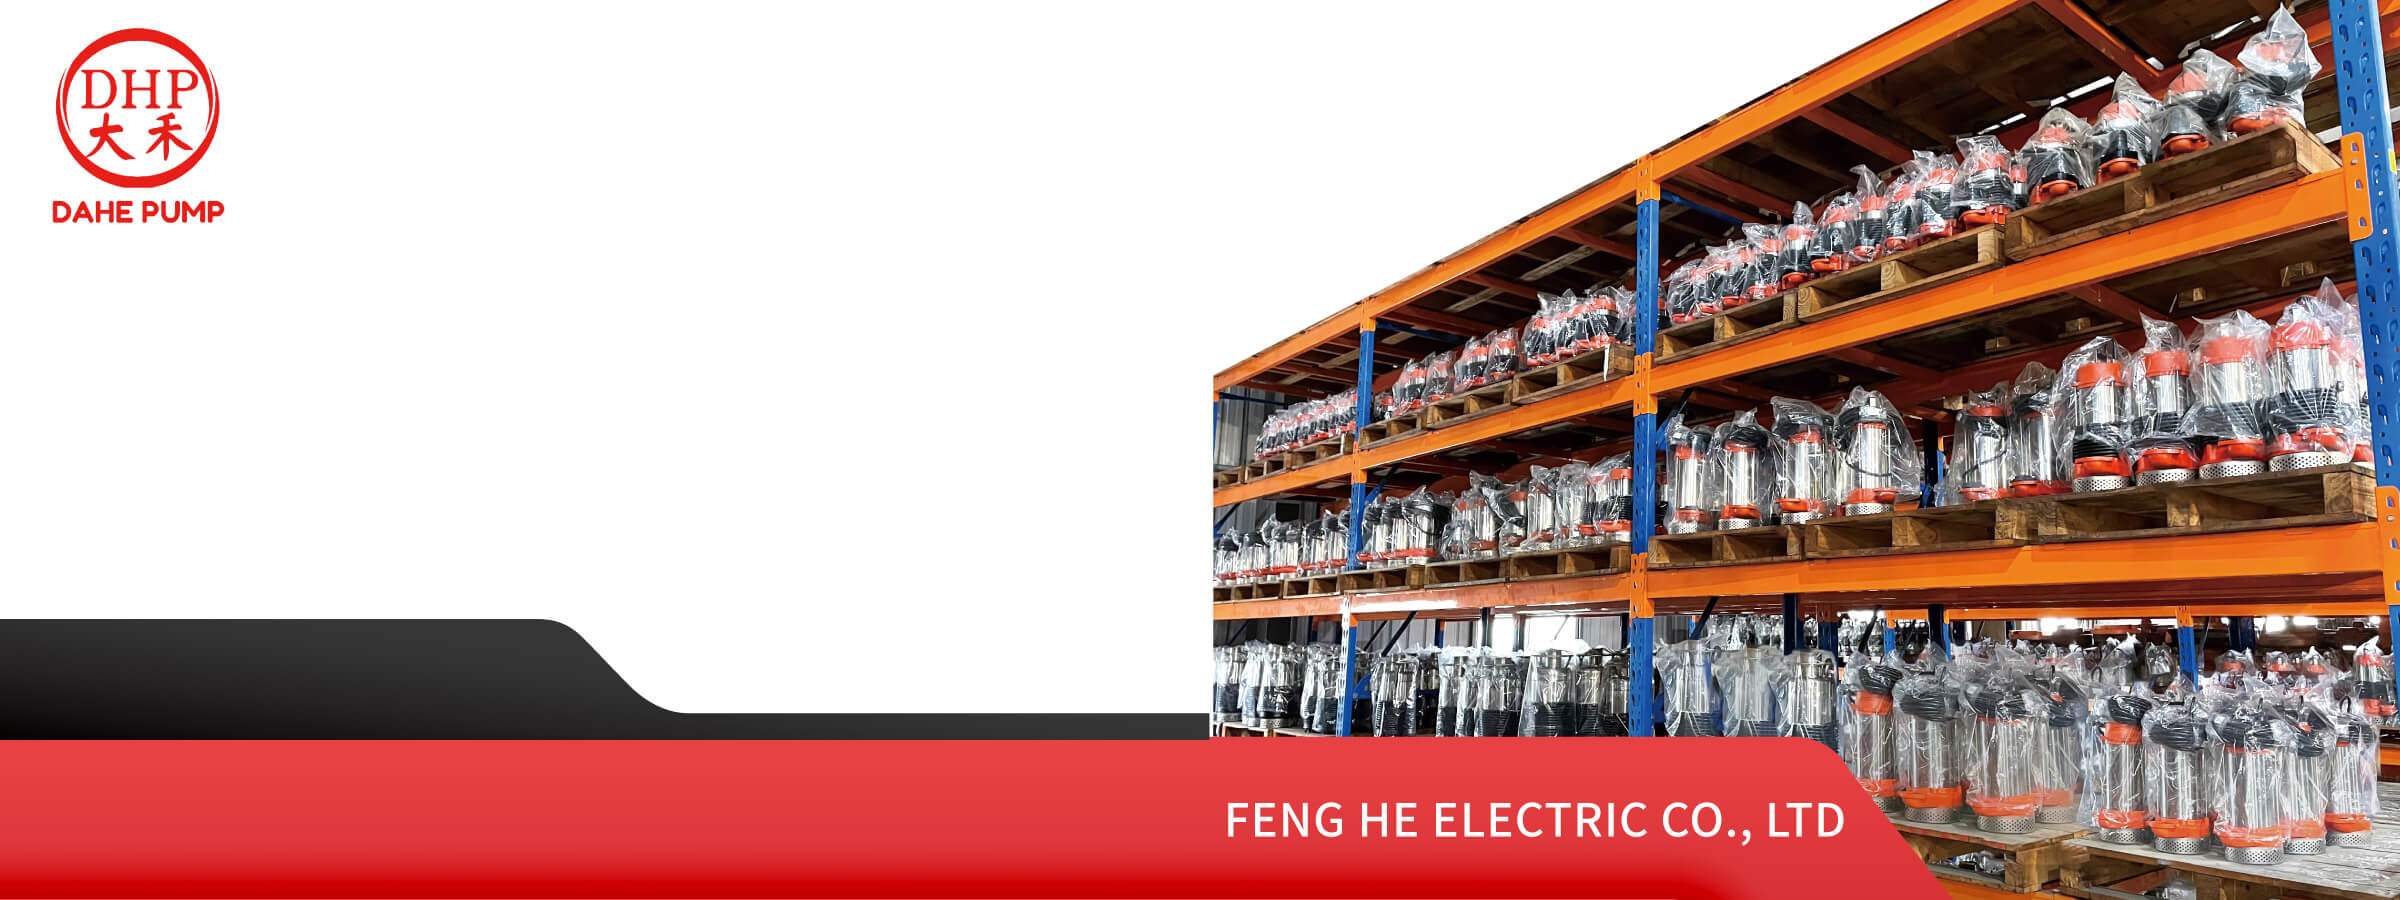 FENG HE ELECTRIC CO.,LTD. pic